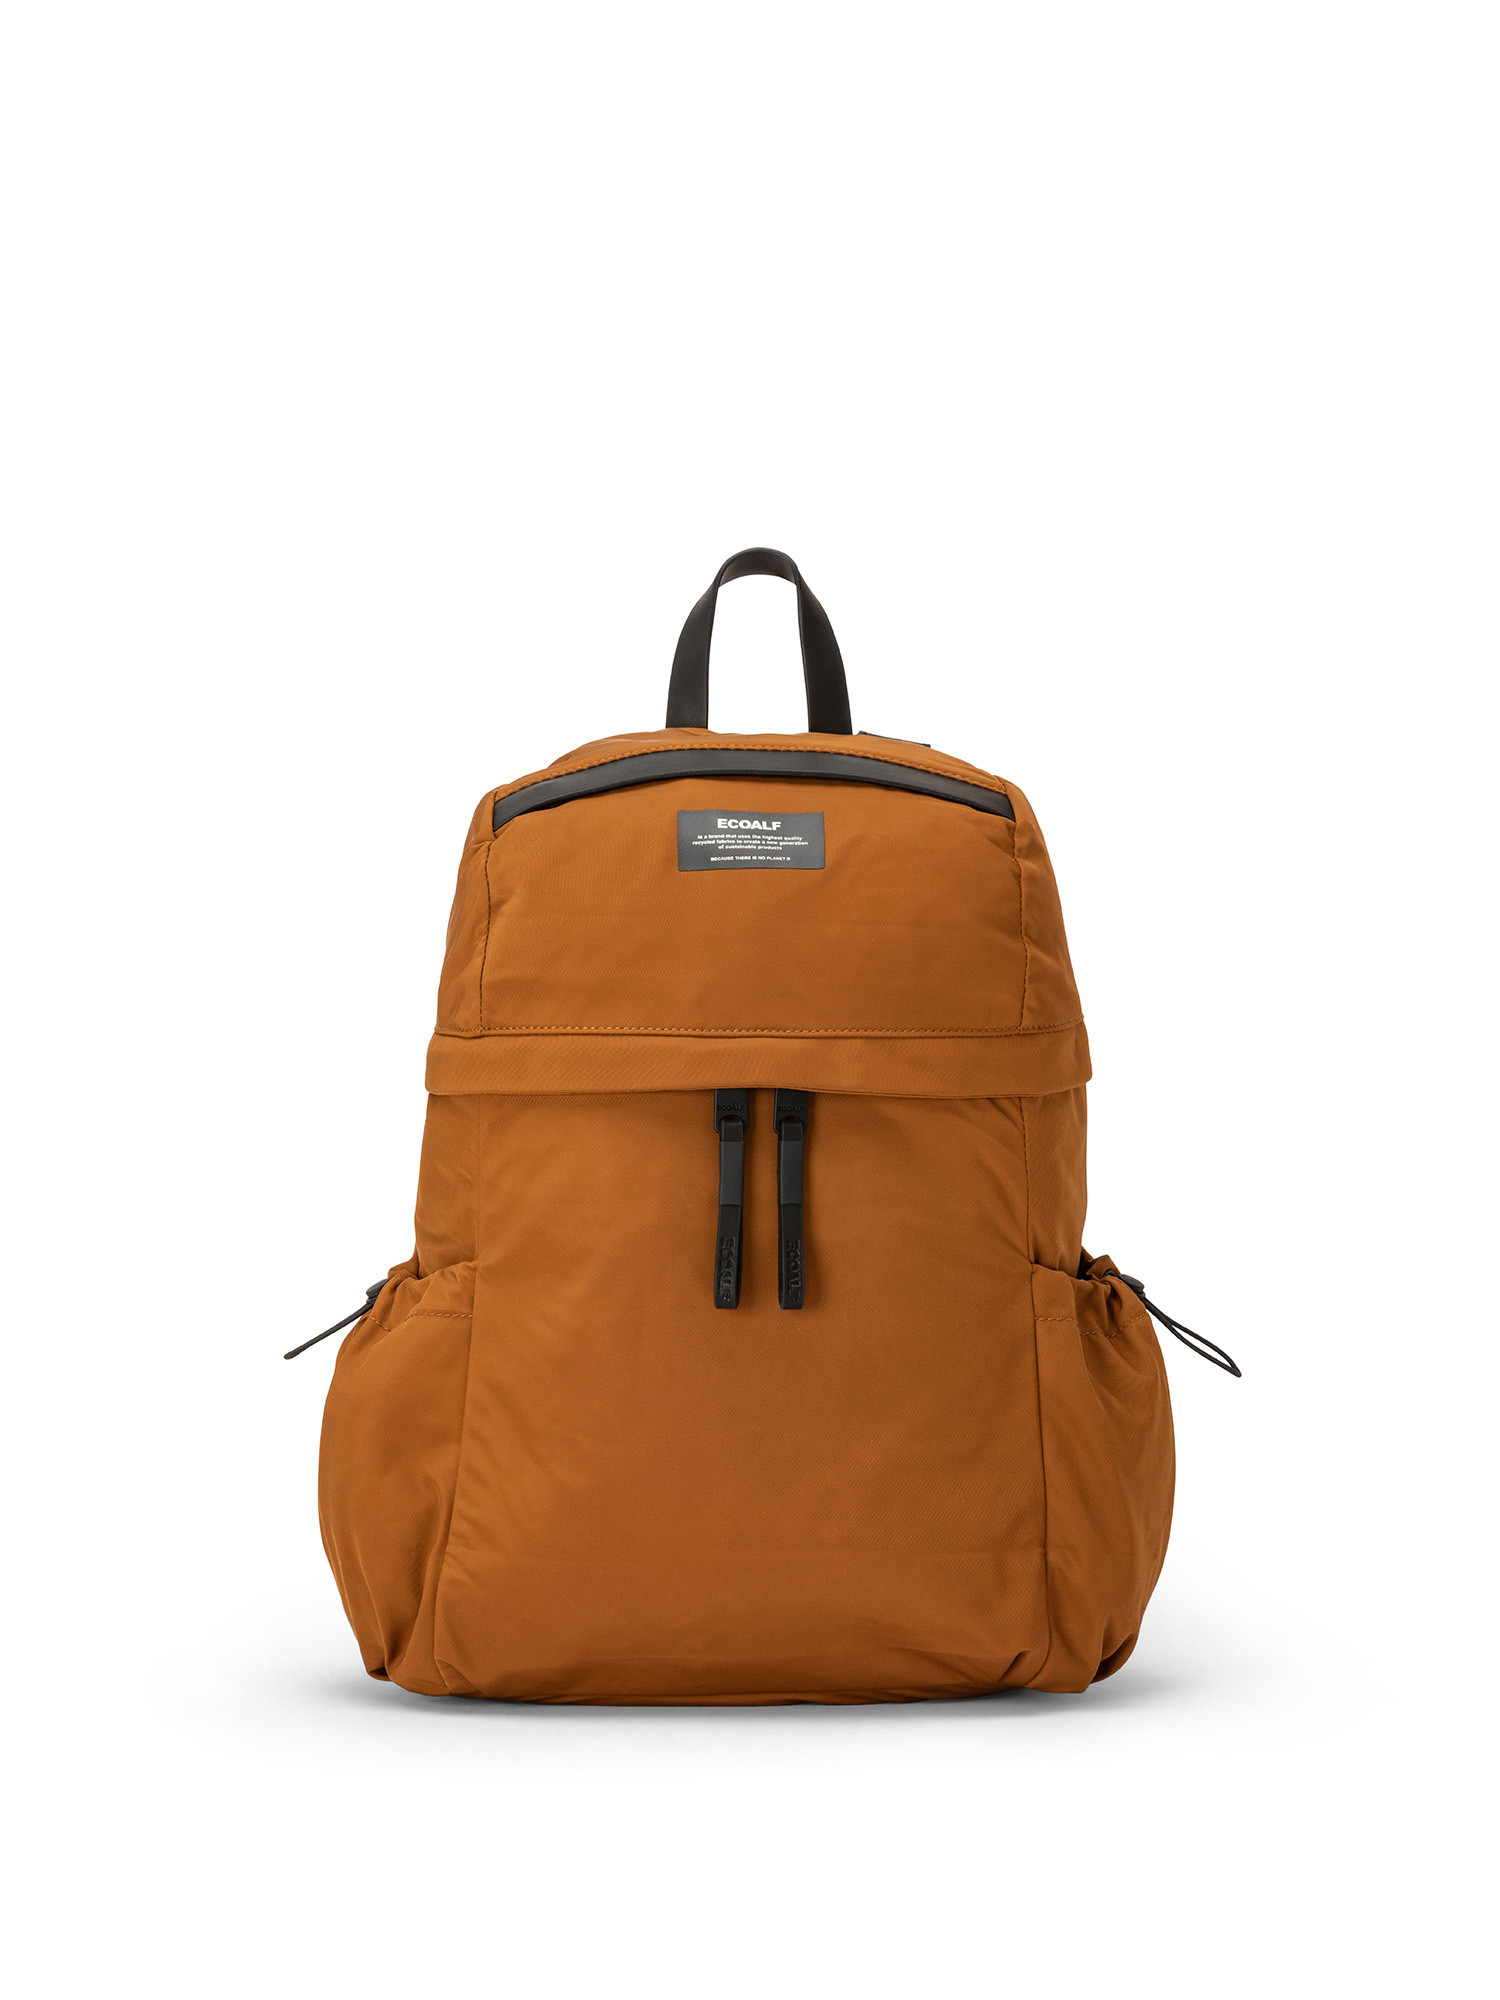 Ecoalf - Waterproof Mom Backpack, Mustard Yellow, large image number 0